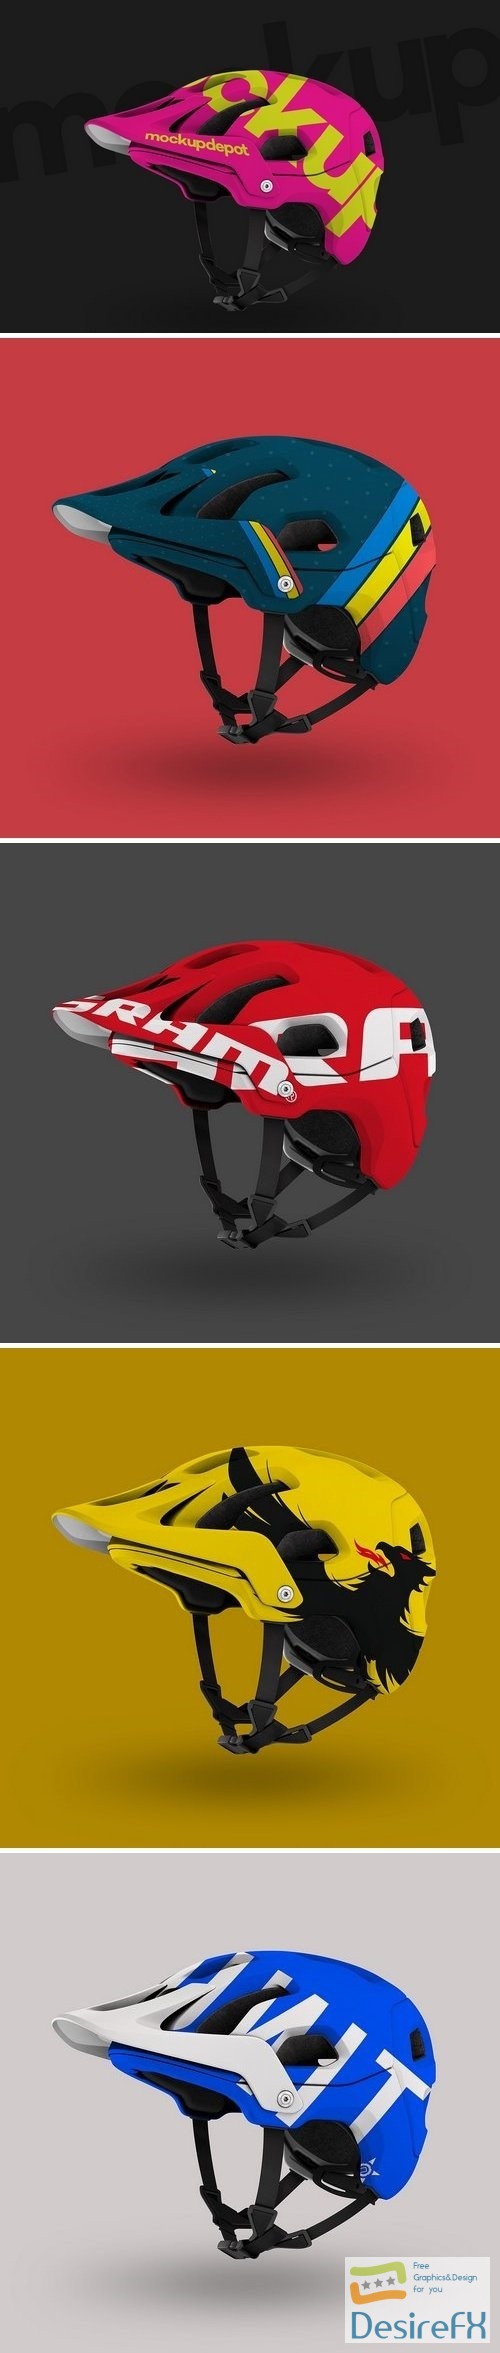 Download Desirefx.com | Download 4K Mountain Bike Helmet PSD Mockup ...